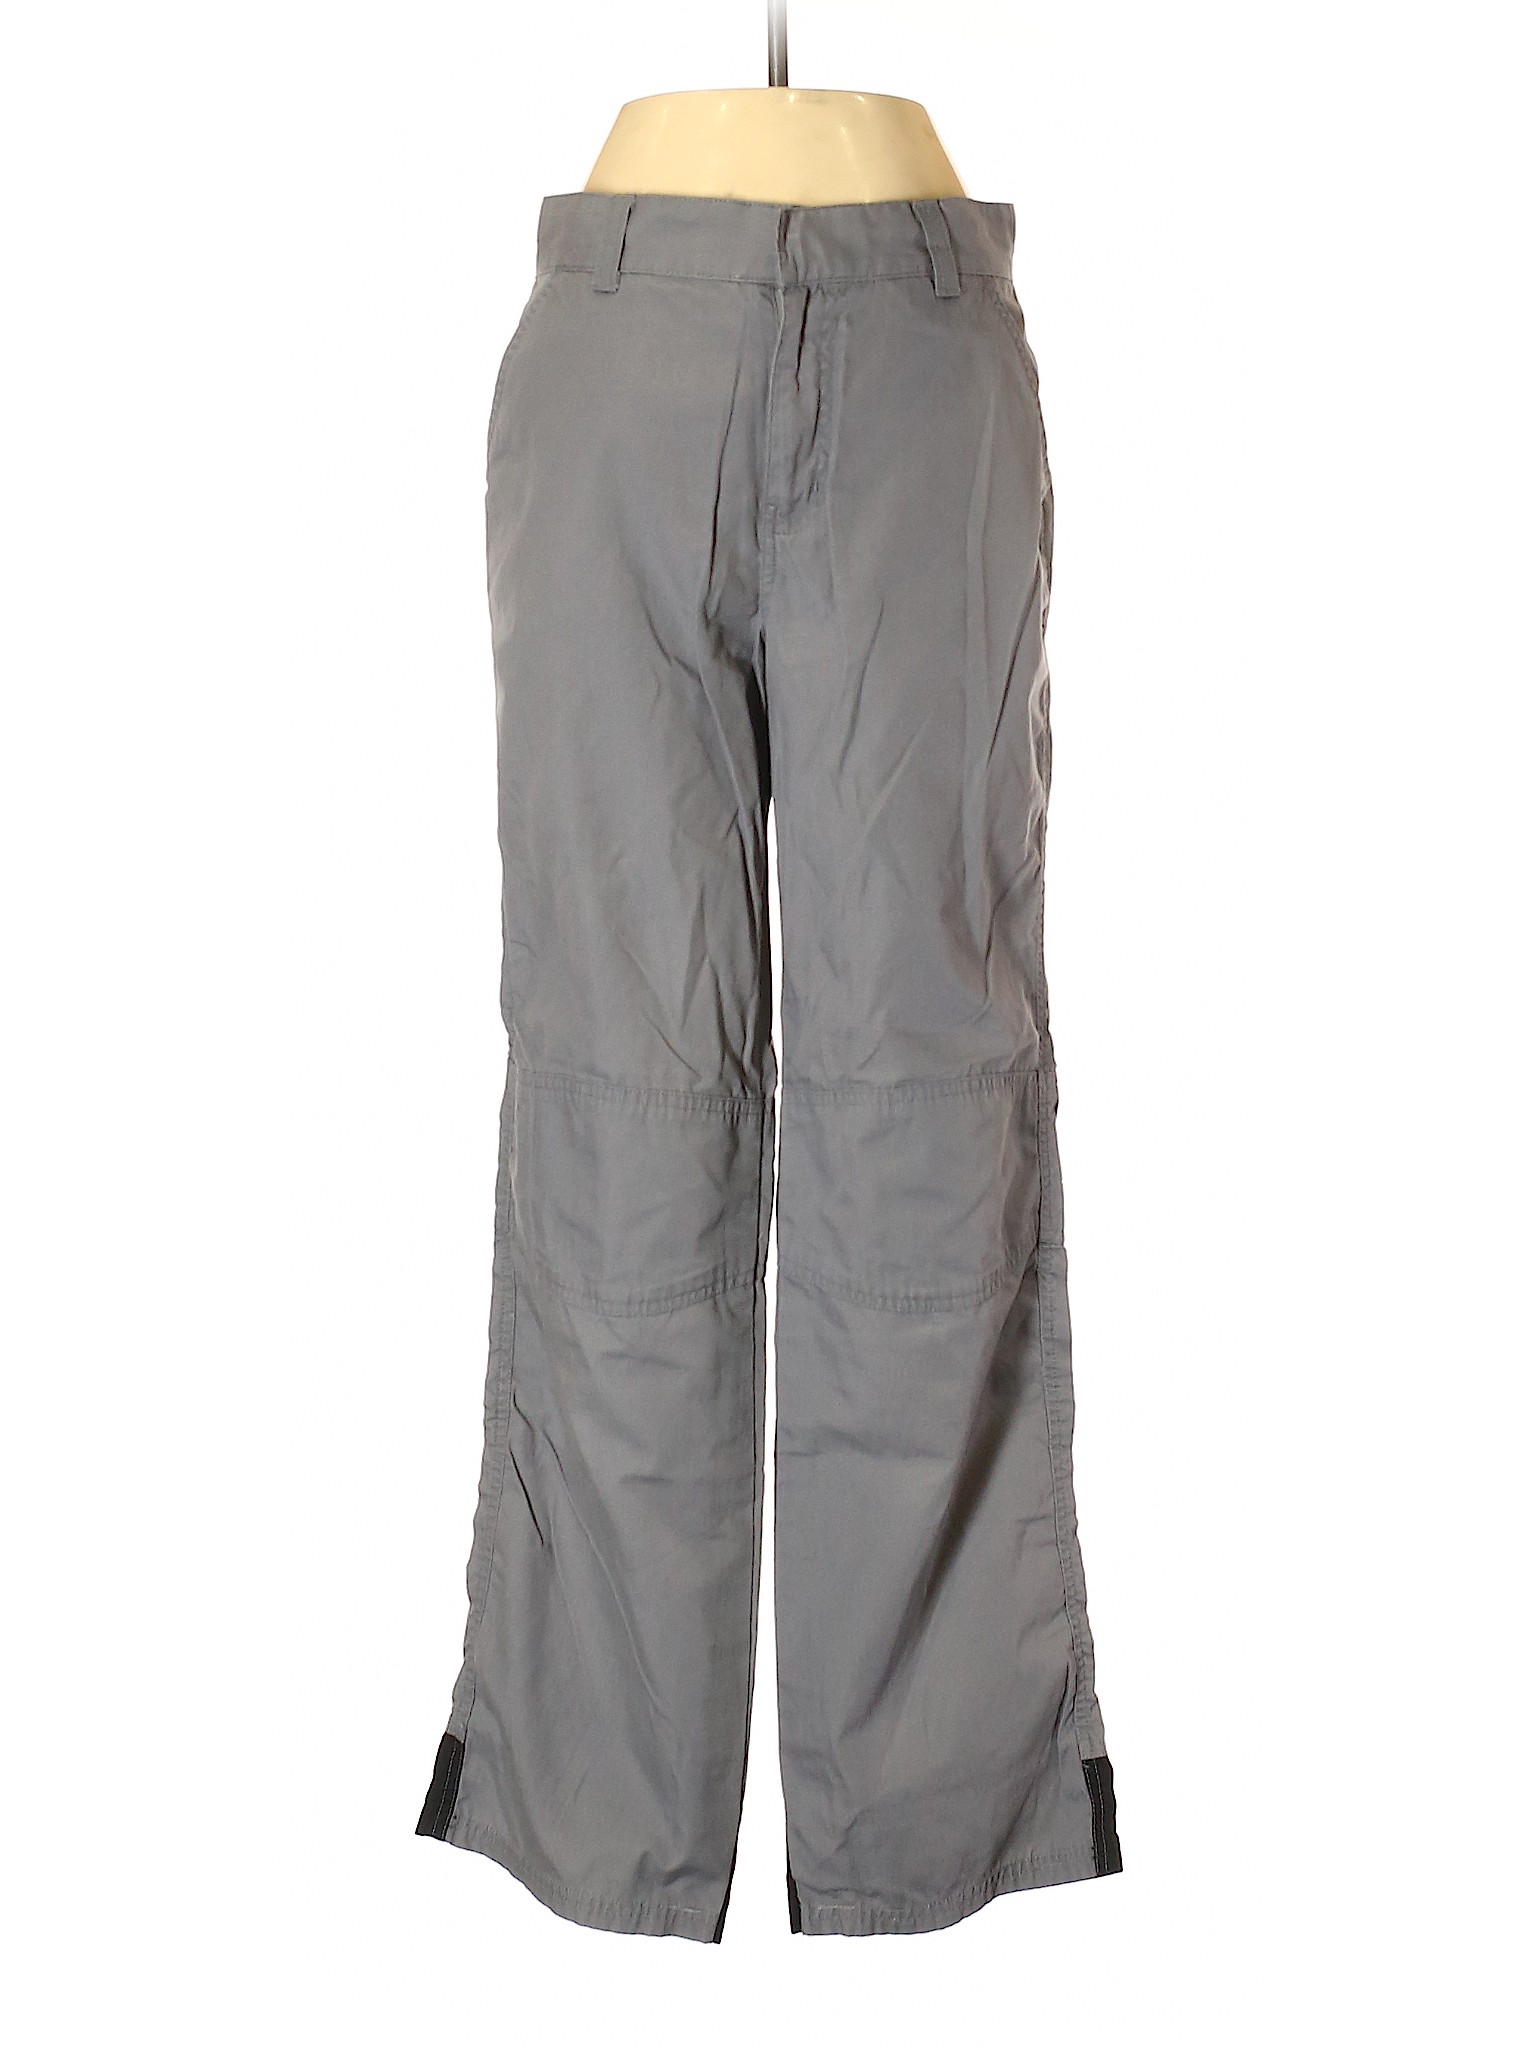 Old Navy Women Gray Casual Pants 4 | eBay